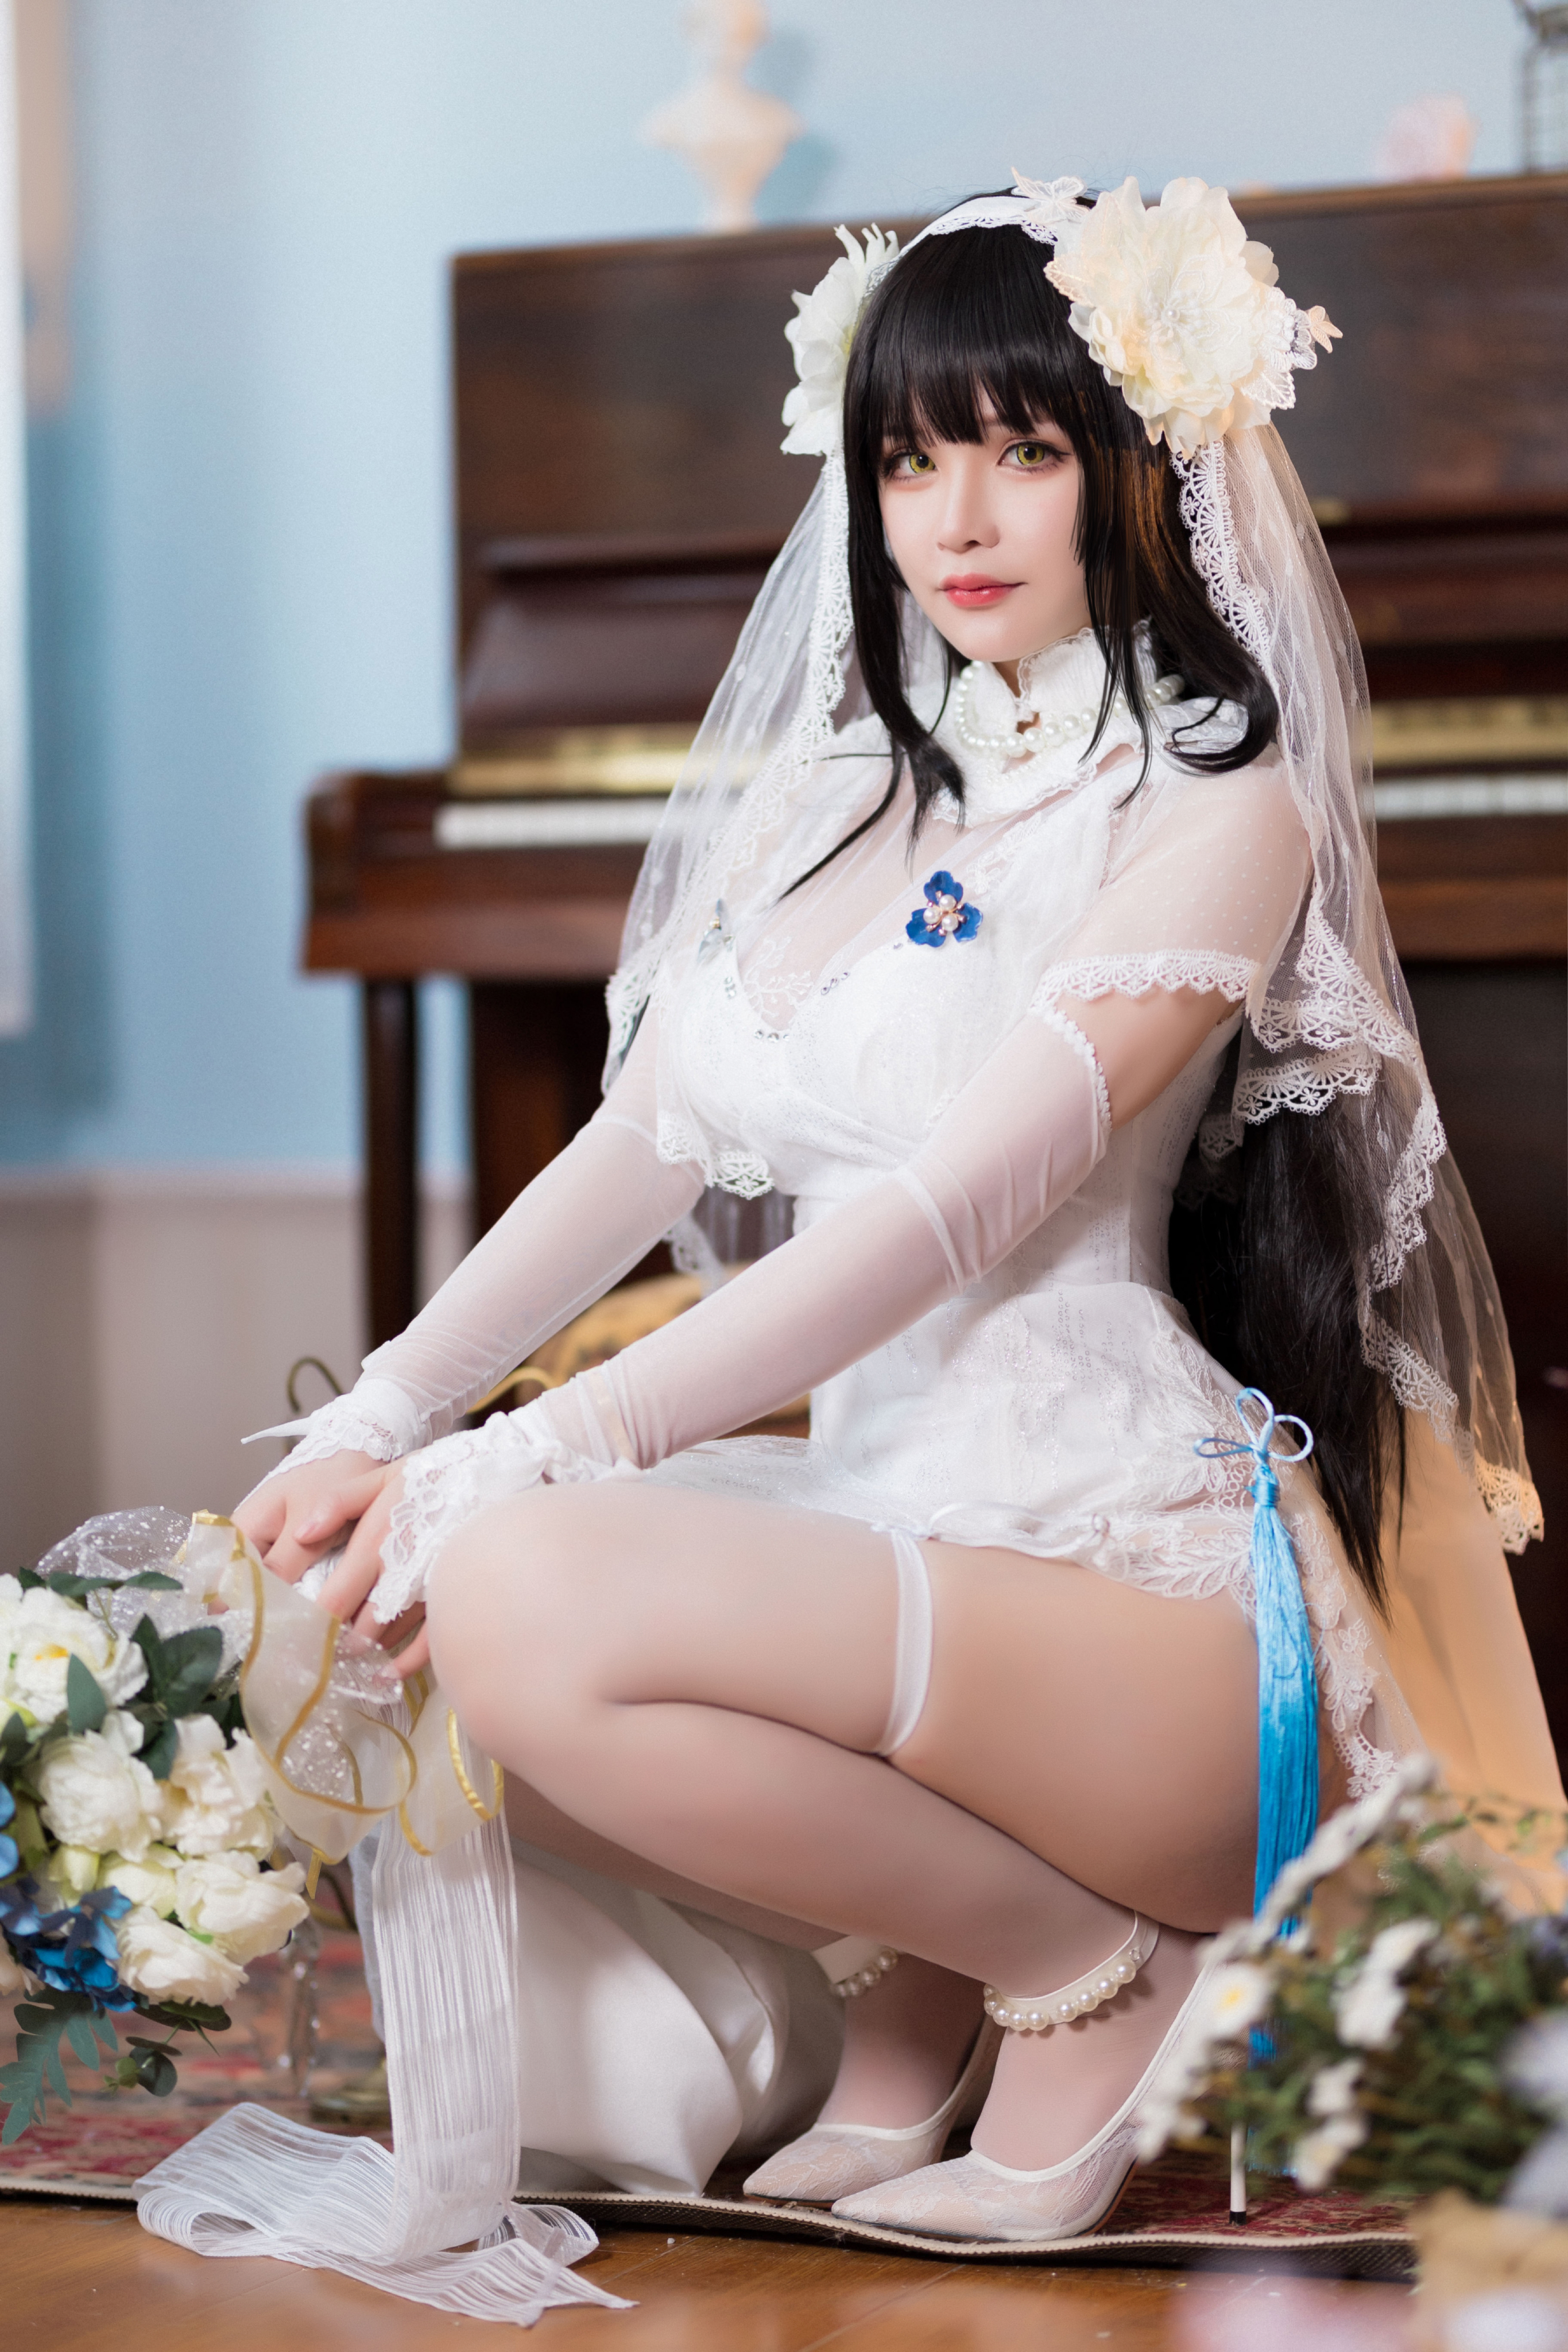 People 2731x4096 Rissoft women model Asian cosplay Type 95 Girls Frontline brides wedding dress dress lingerie stockings white stockings indoors women indoors